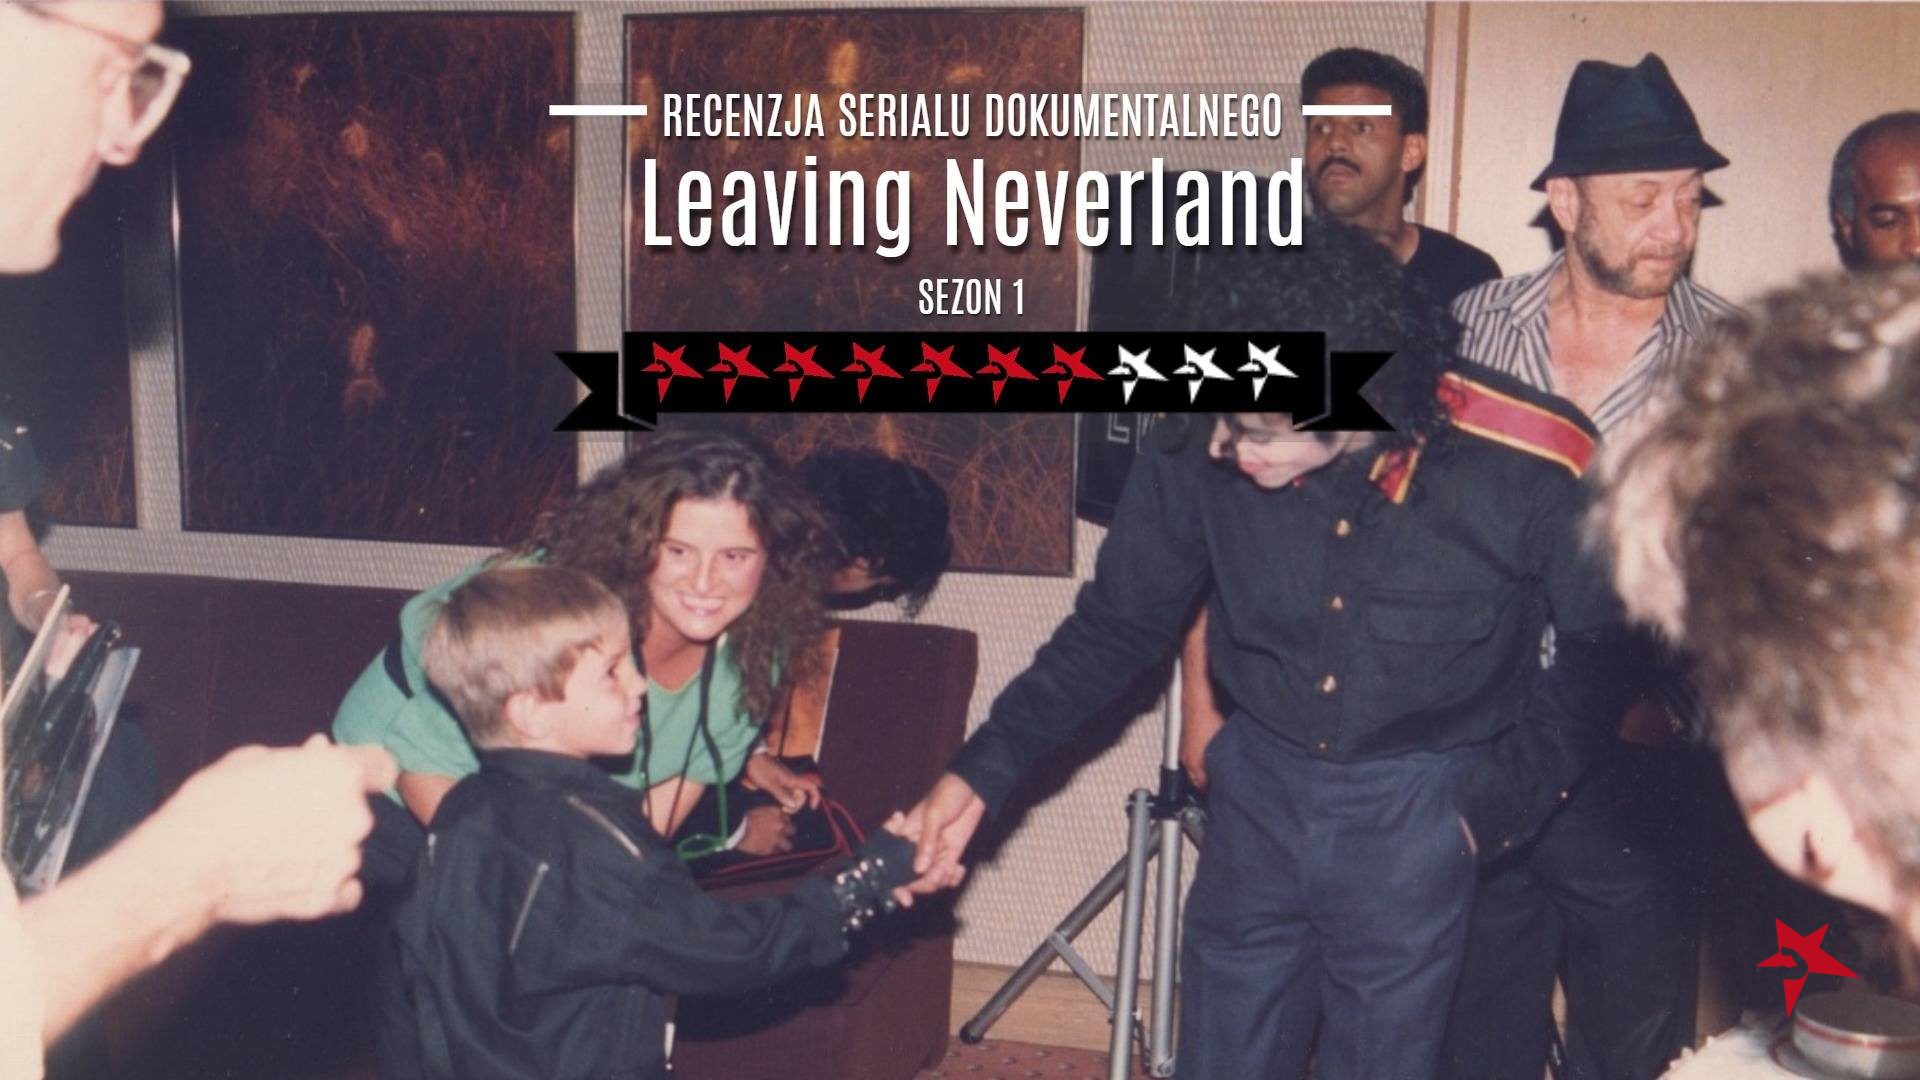 Leaving Neverland recenzja dokument hbo go michael jackson